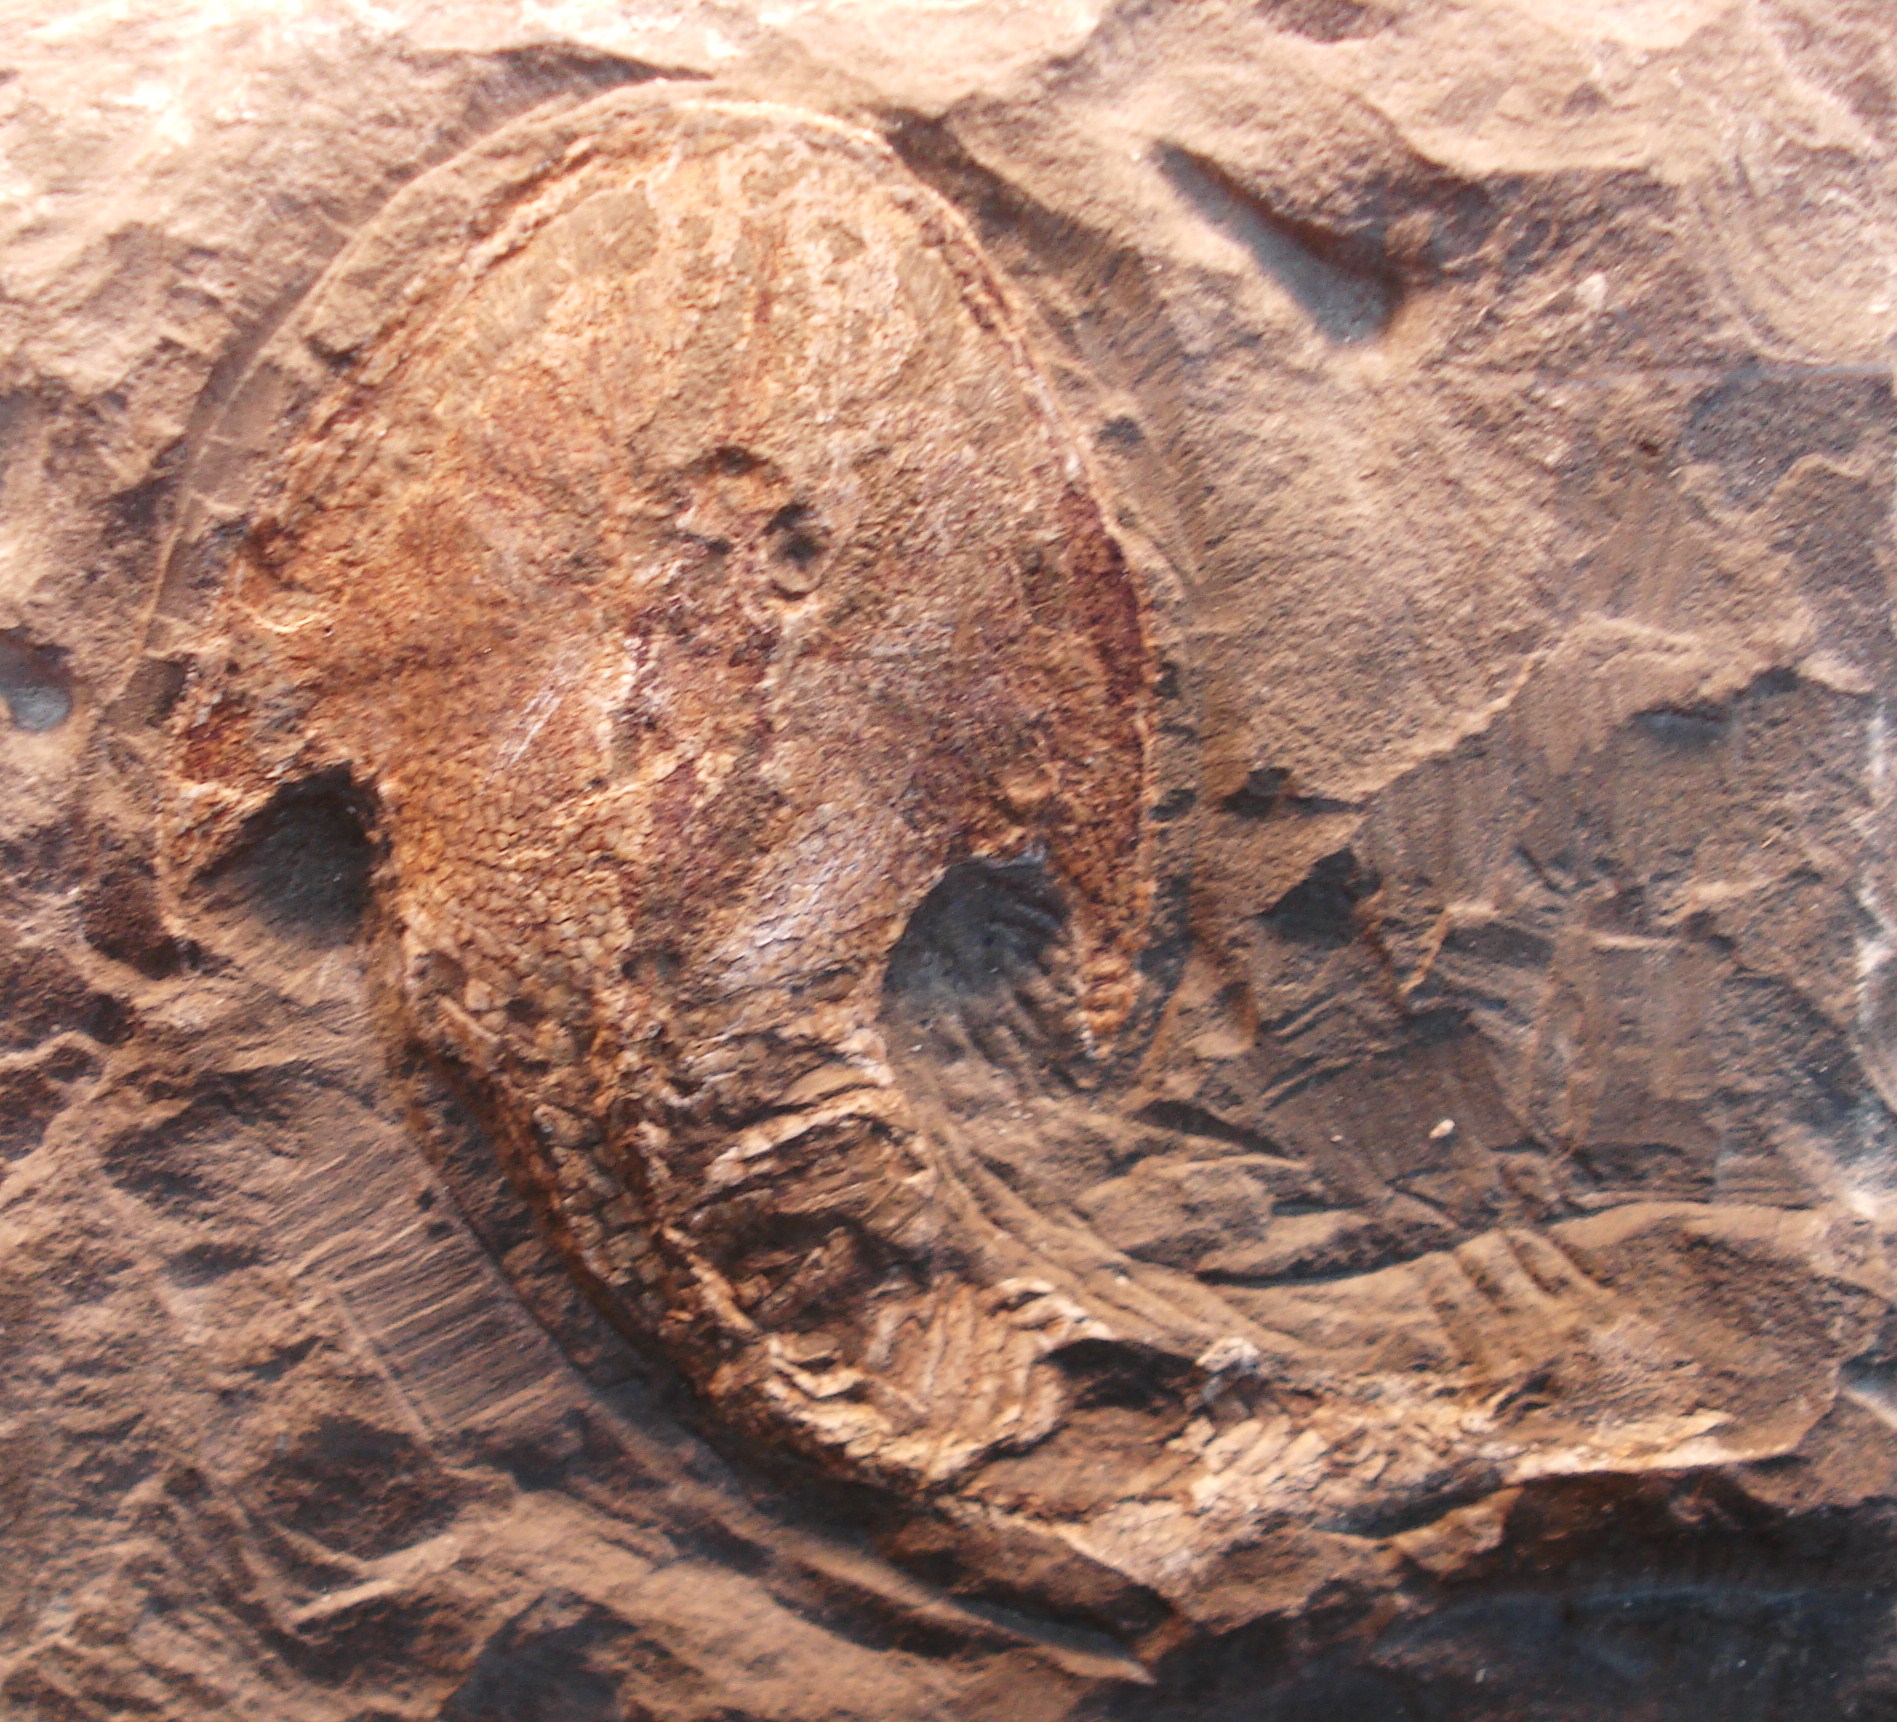 Pez fósil - Wikipedia, la enciclopedia libre